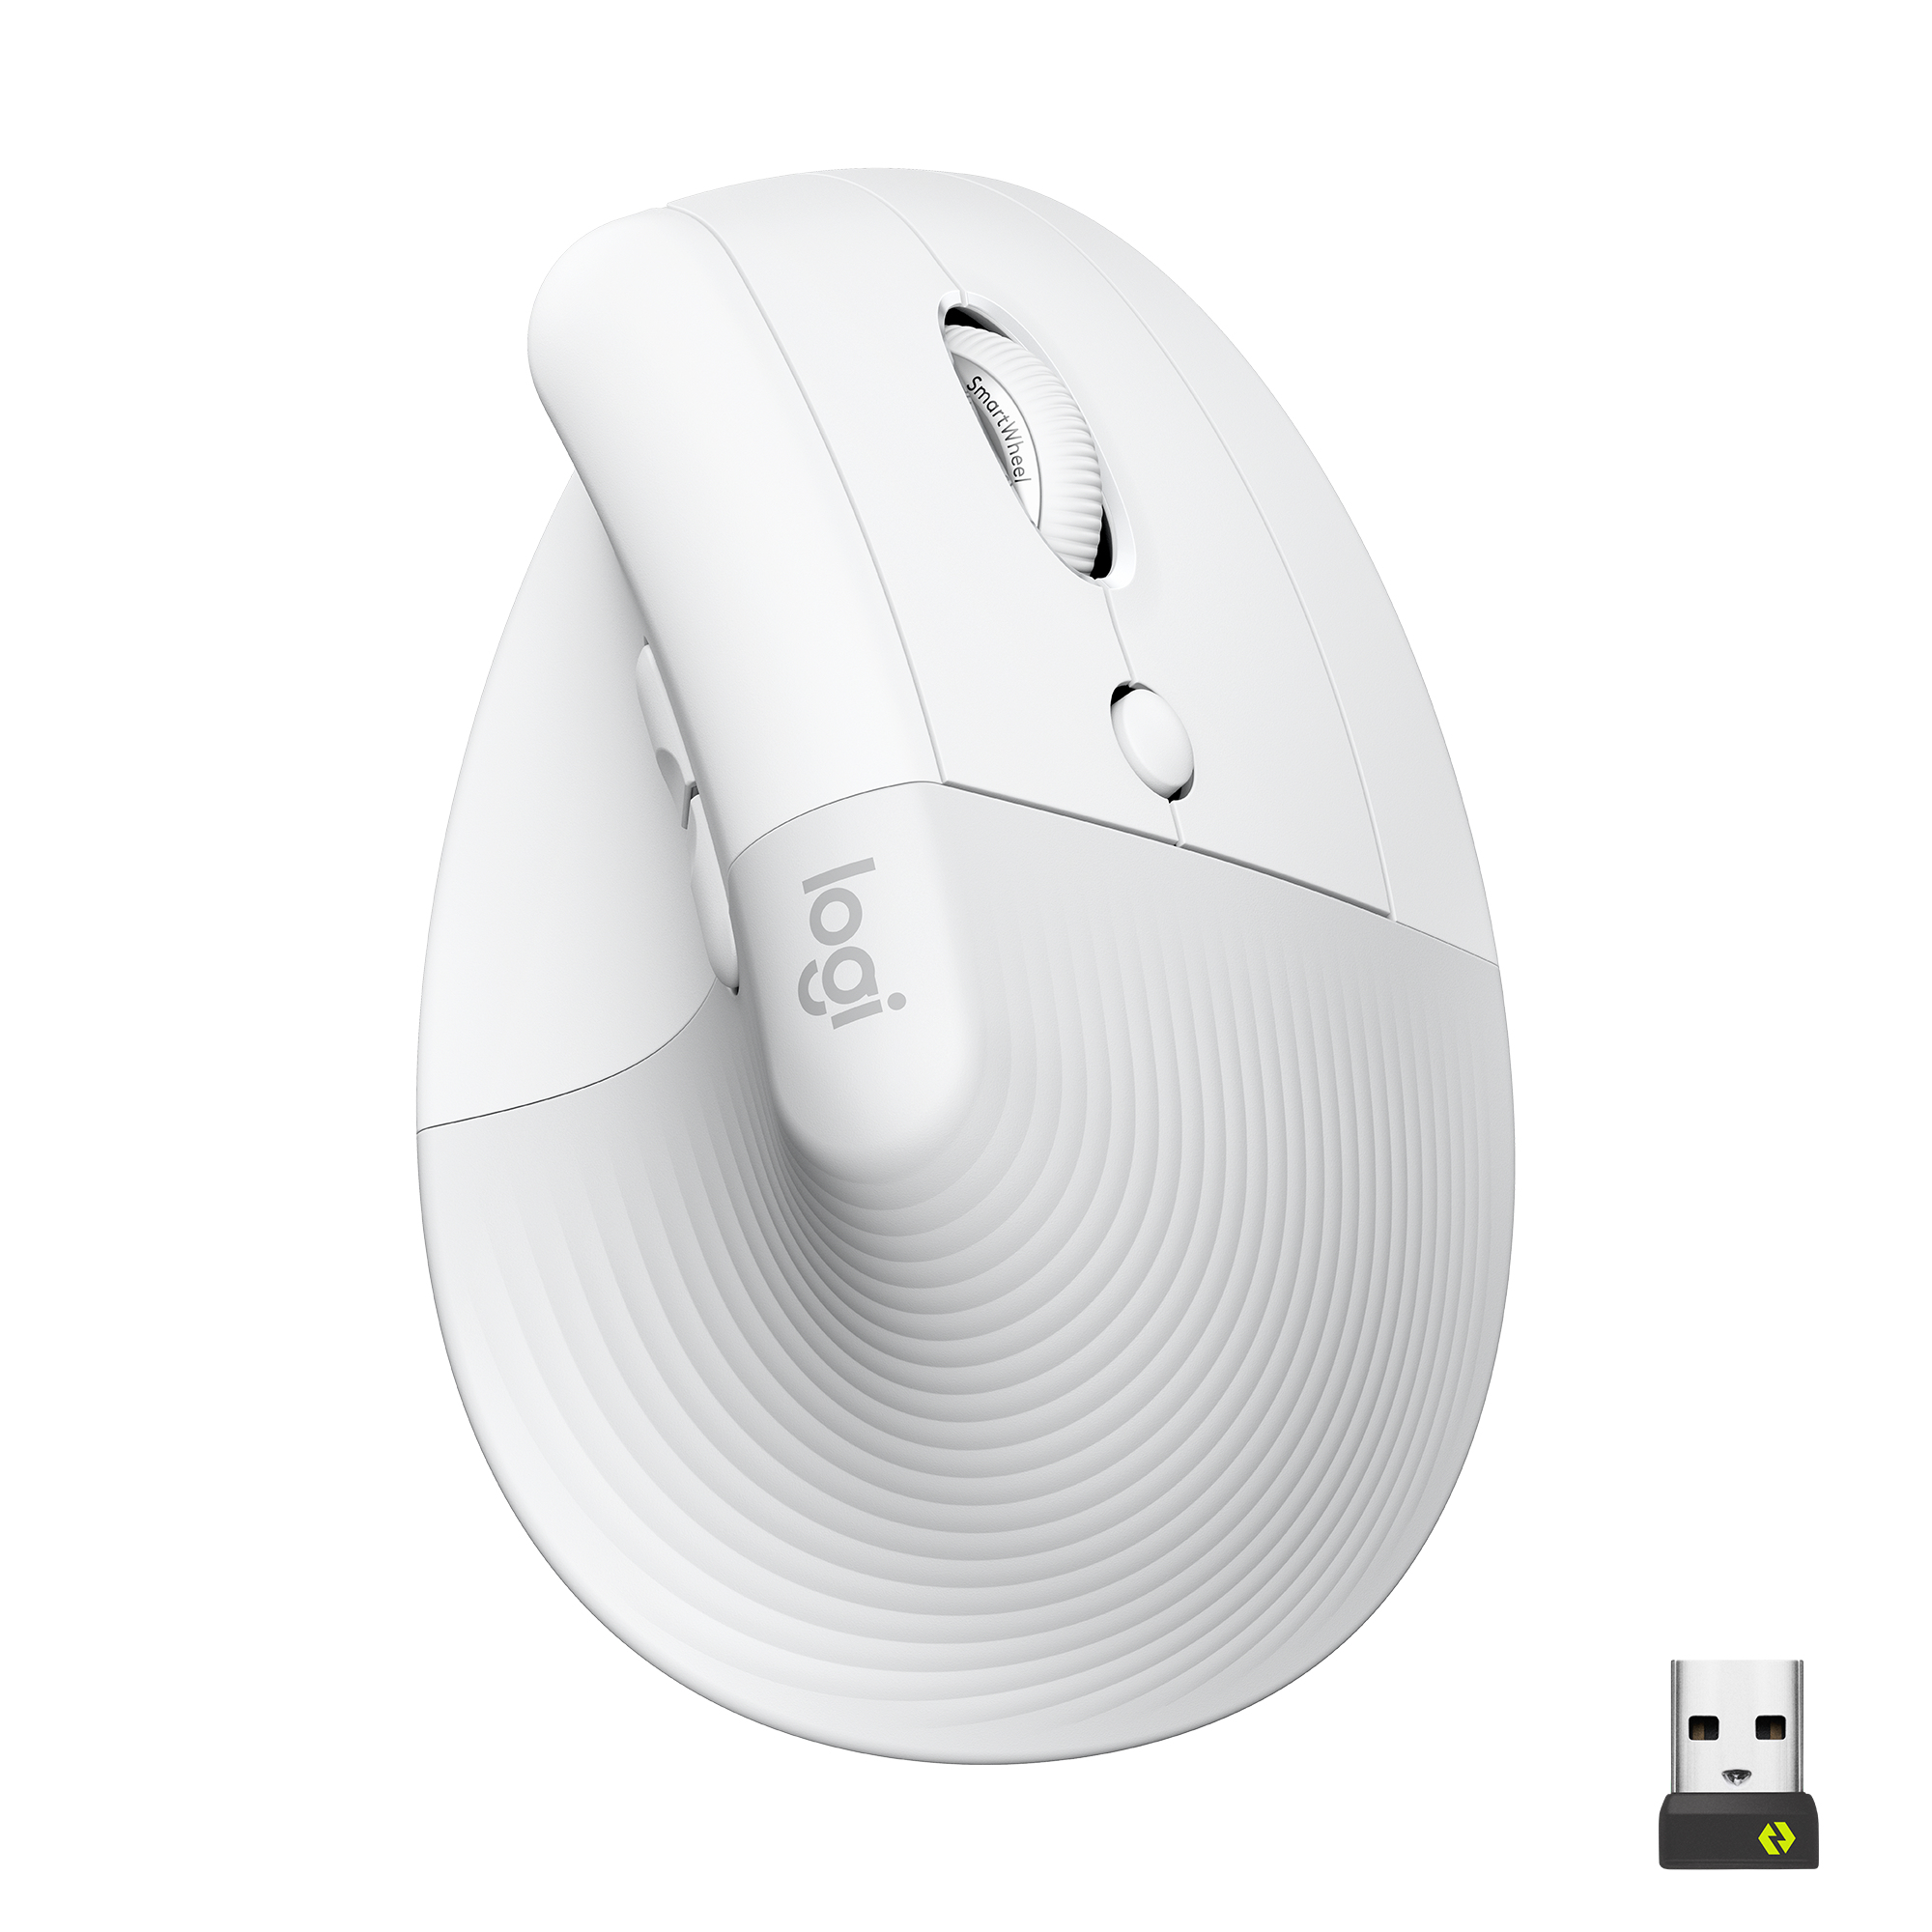 Image of Logitech Lift Mouse Ergonomico Verticale, Senza Fili, Ricevitore Bluetooth o Logi Bolt USB, Clic Silenziosi, 4 Tasti, Compatibile con Windows / macOS / iPadOS, Laptop, PC. Bianco